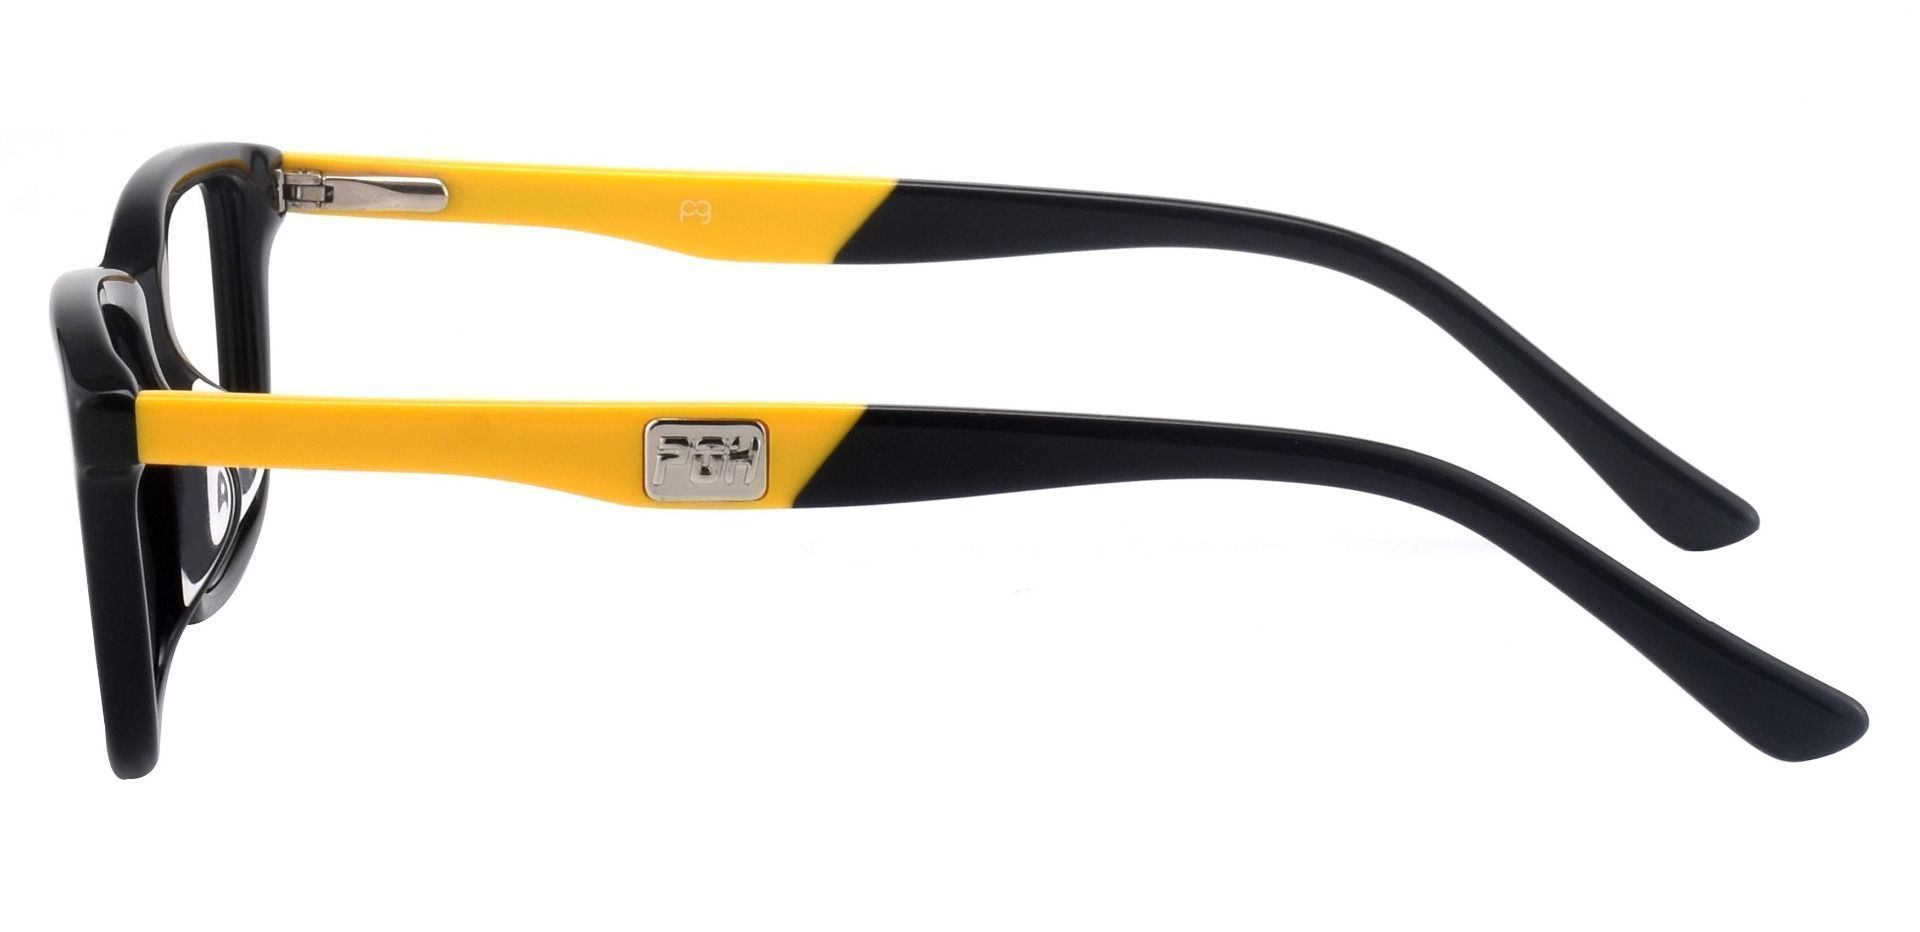 Allegheny Rectangle Non-Rx Glasses - Black-yellow